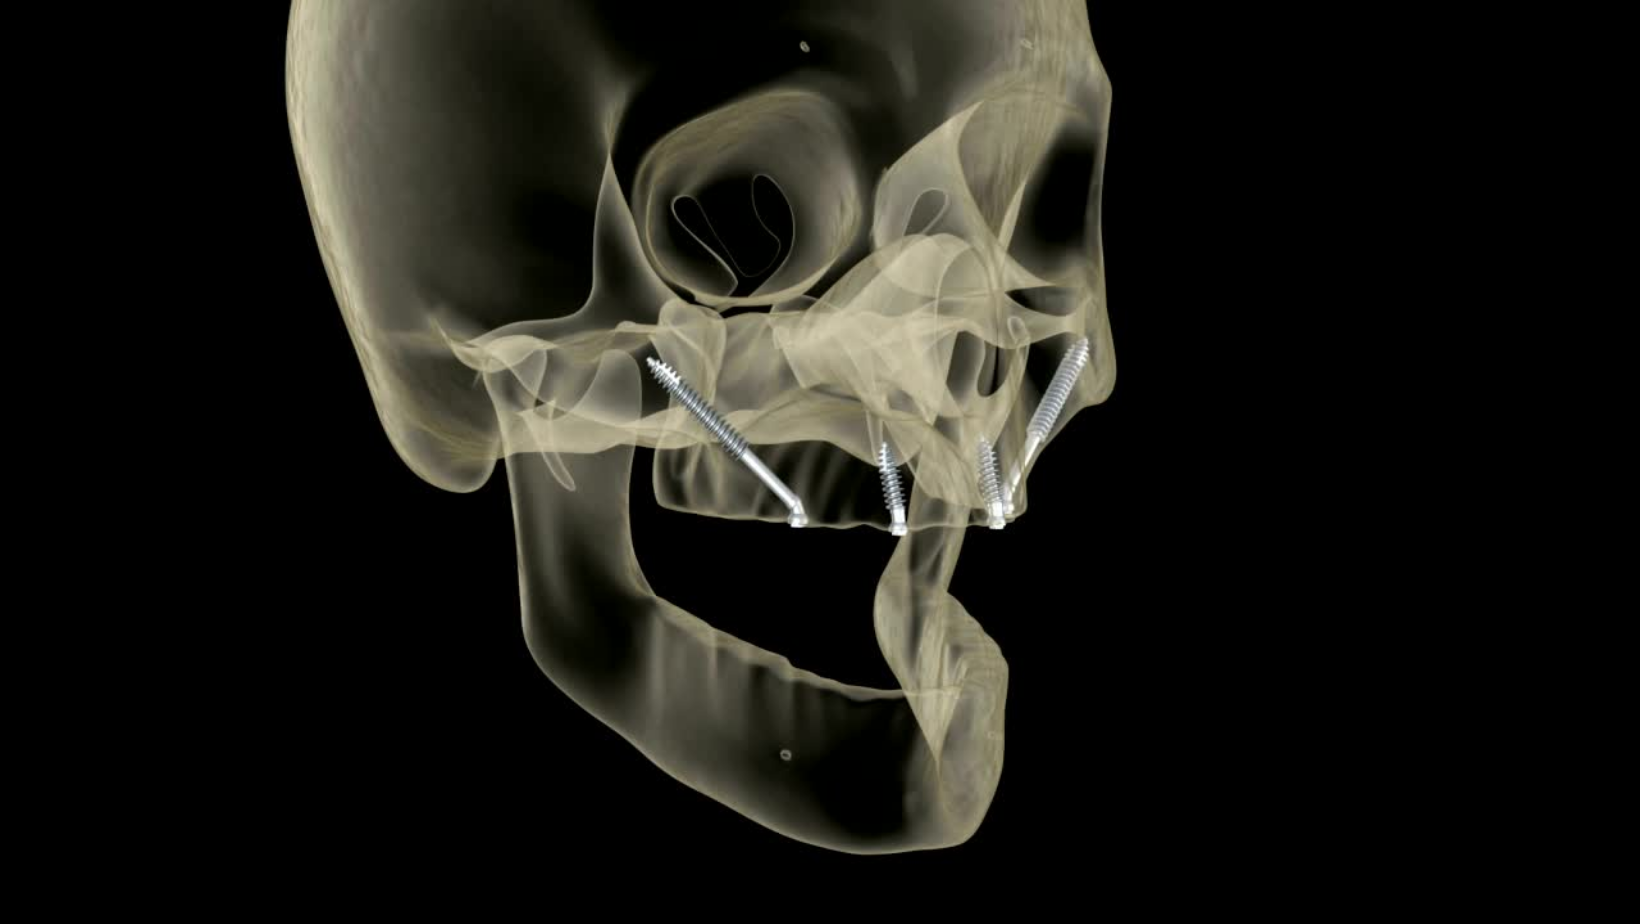 Alternative dental implant placement, zygomatic dental implants